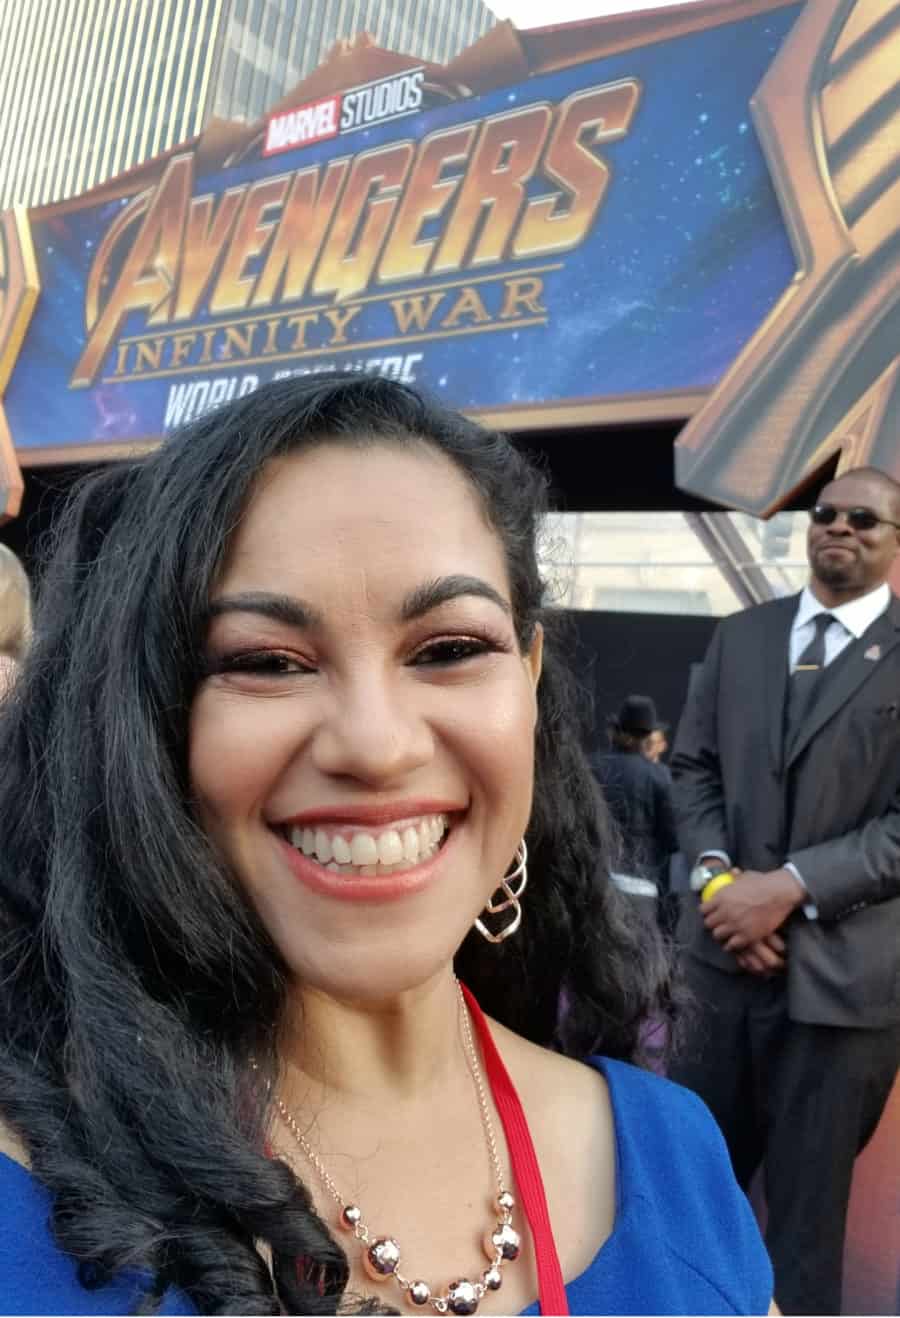 Avengers: Infinity War red carpet World Premiere photos - Elayna Fernandez ~ The Positive MOM